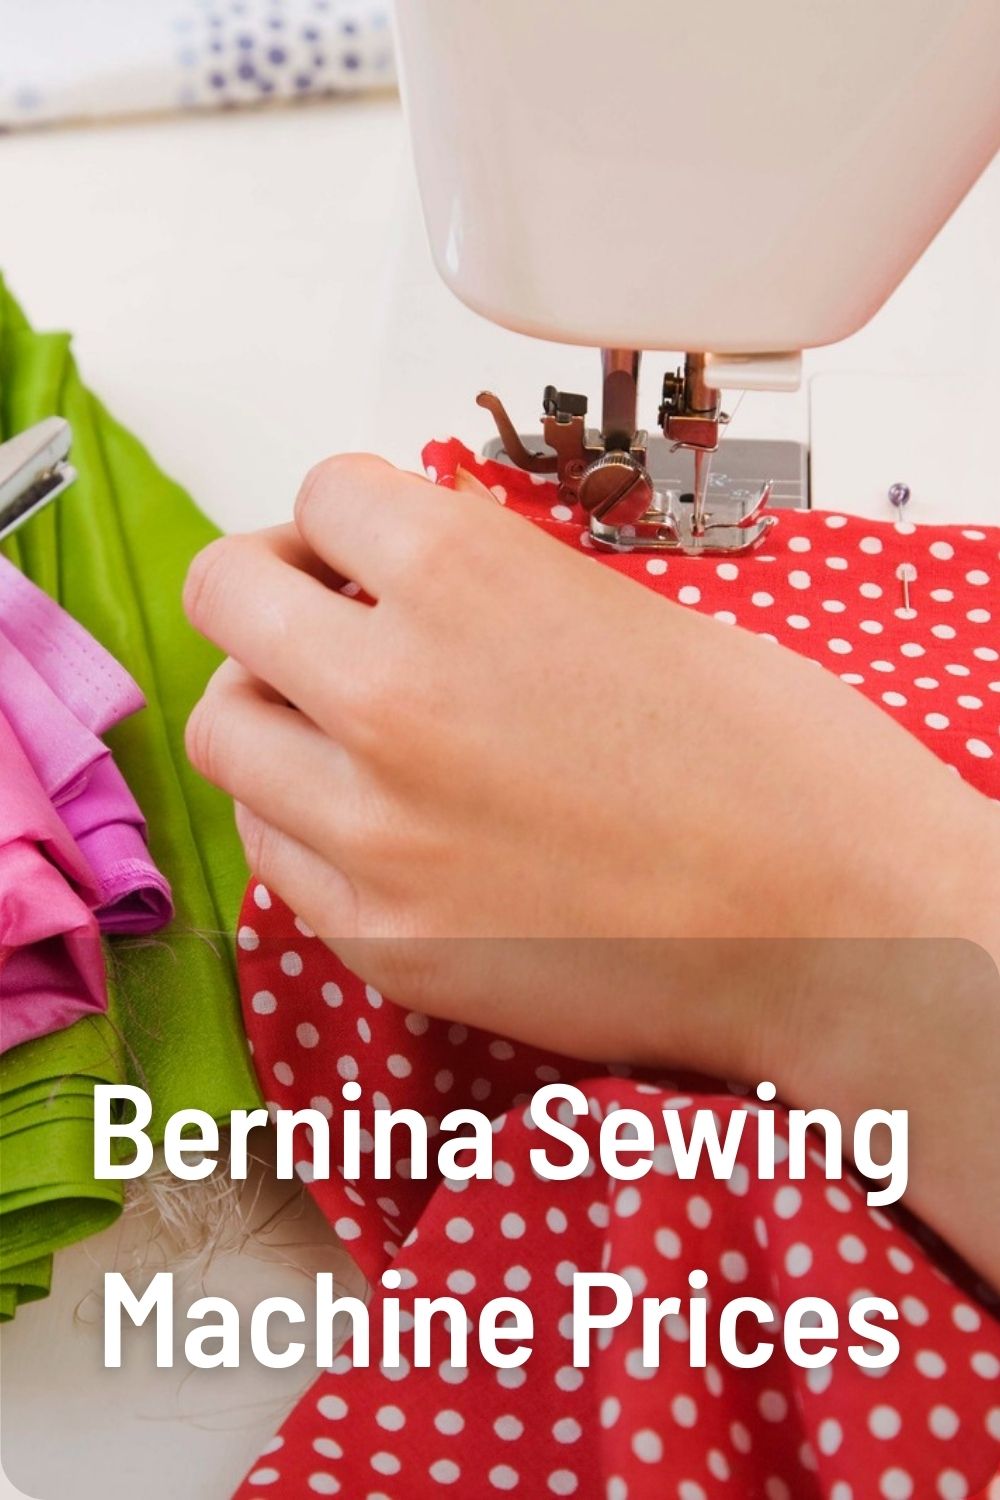 Bernina Sewing Machine Prices